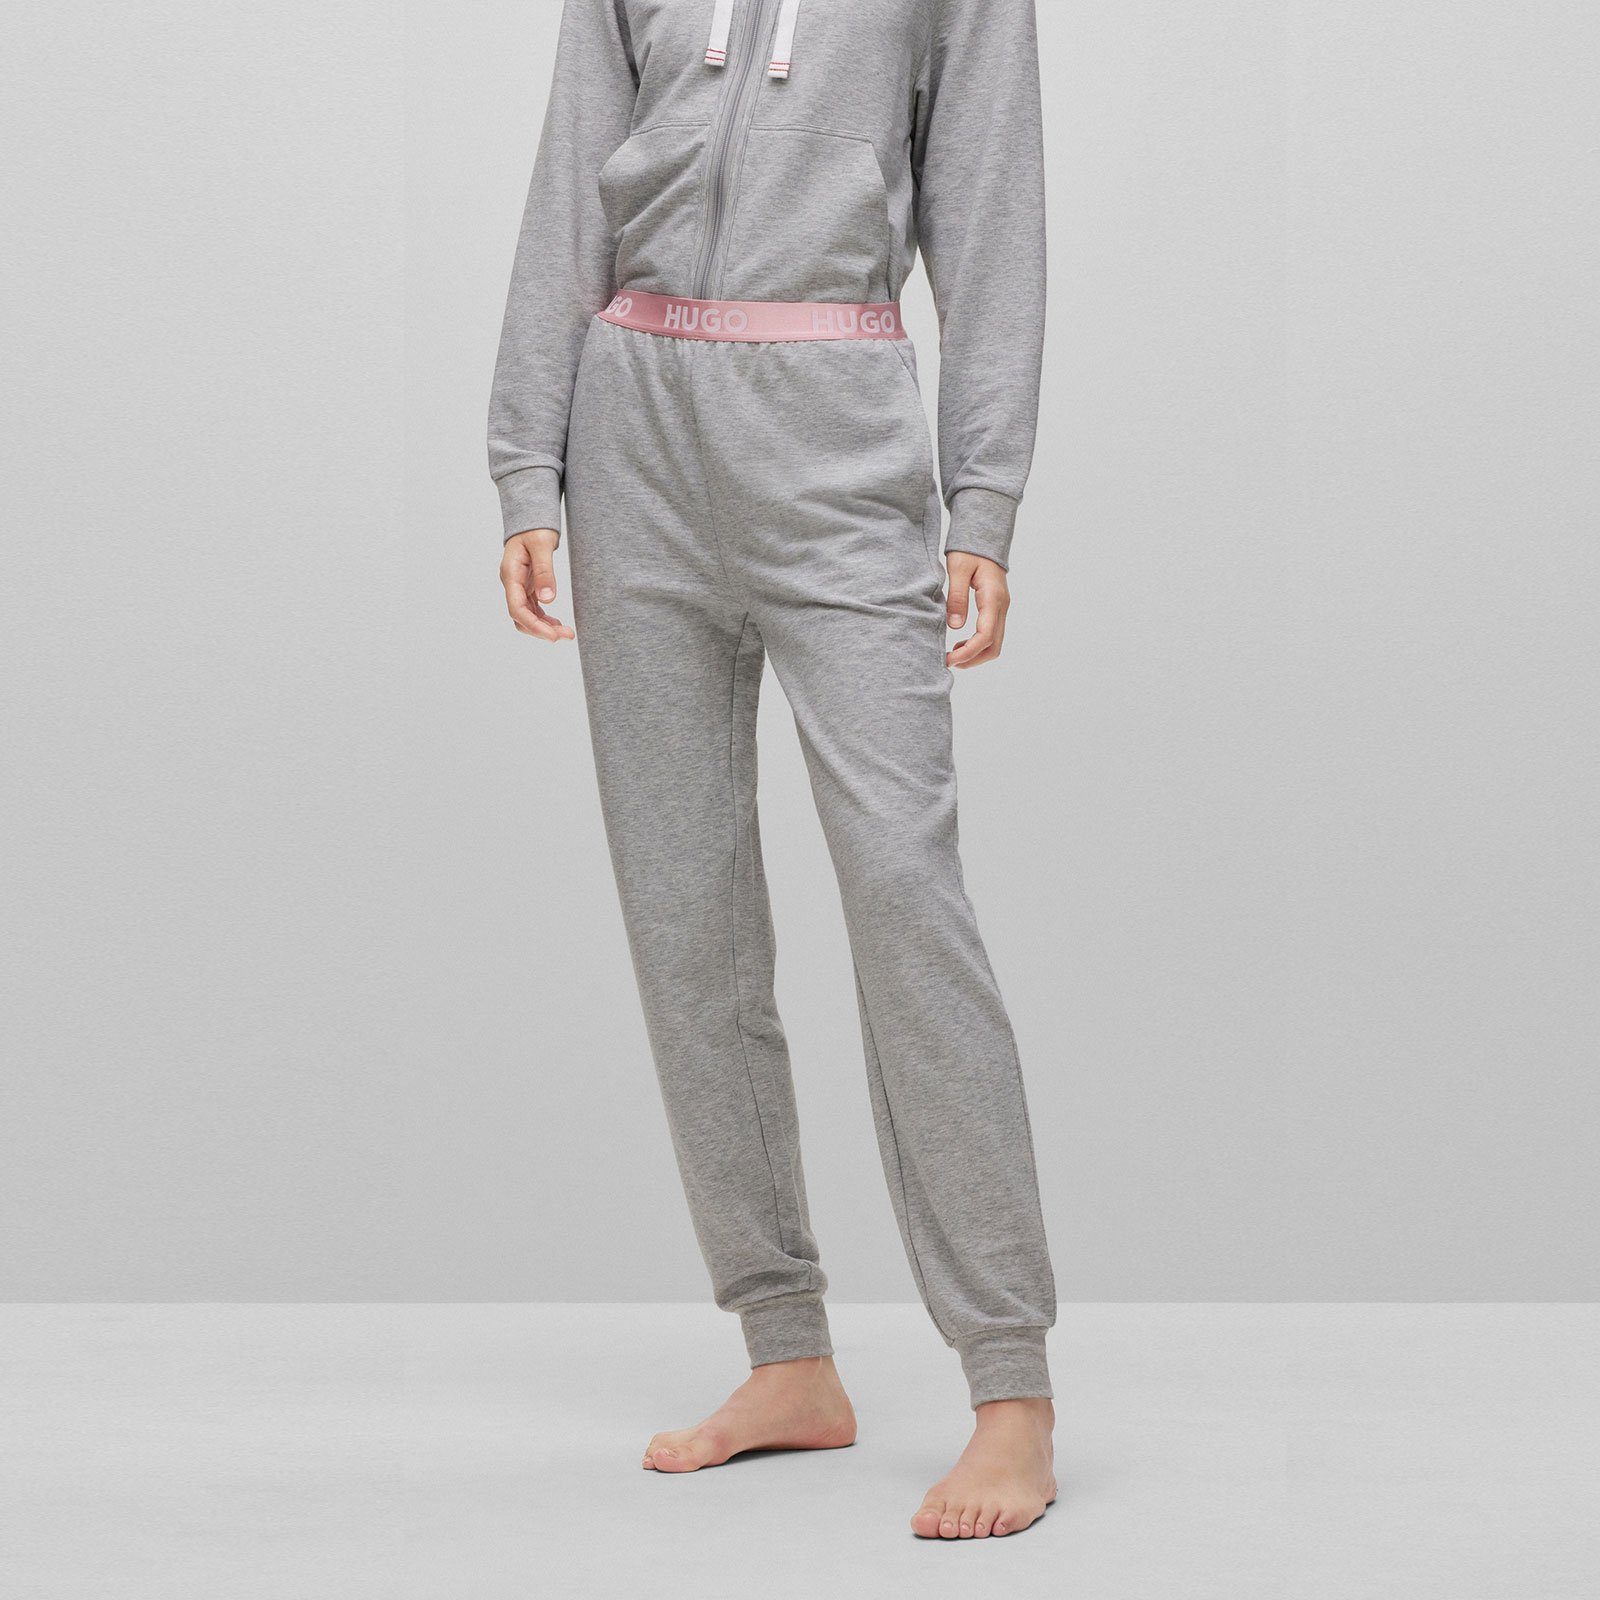 Jogginghose mit mit Marken-Logos grey sichtbarem Pants HUGO 035 Bund Logo Sporty